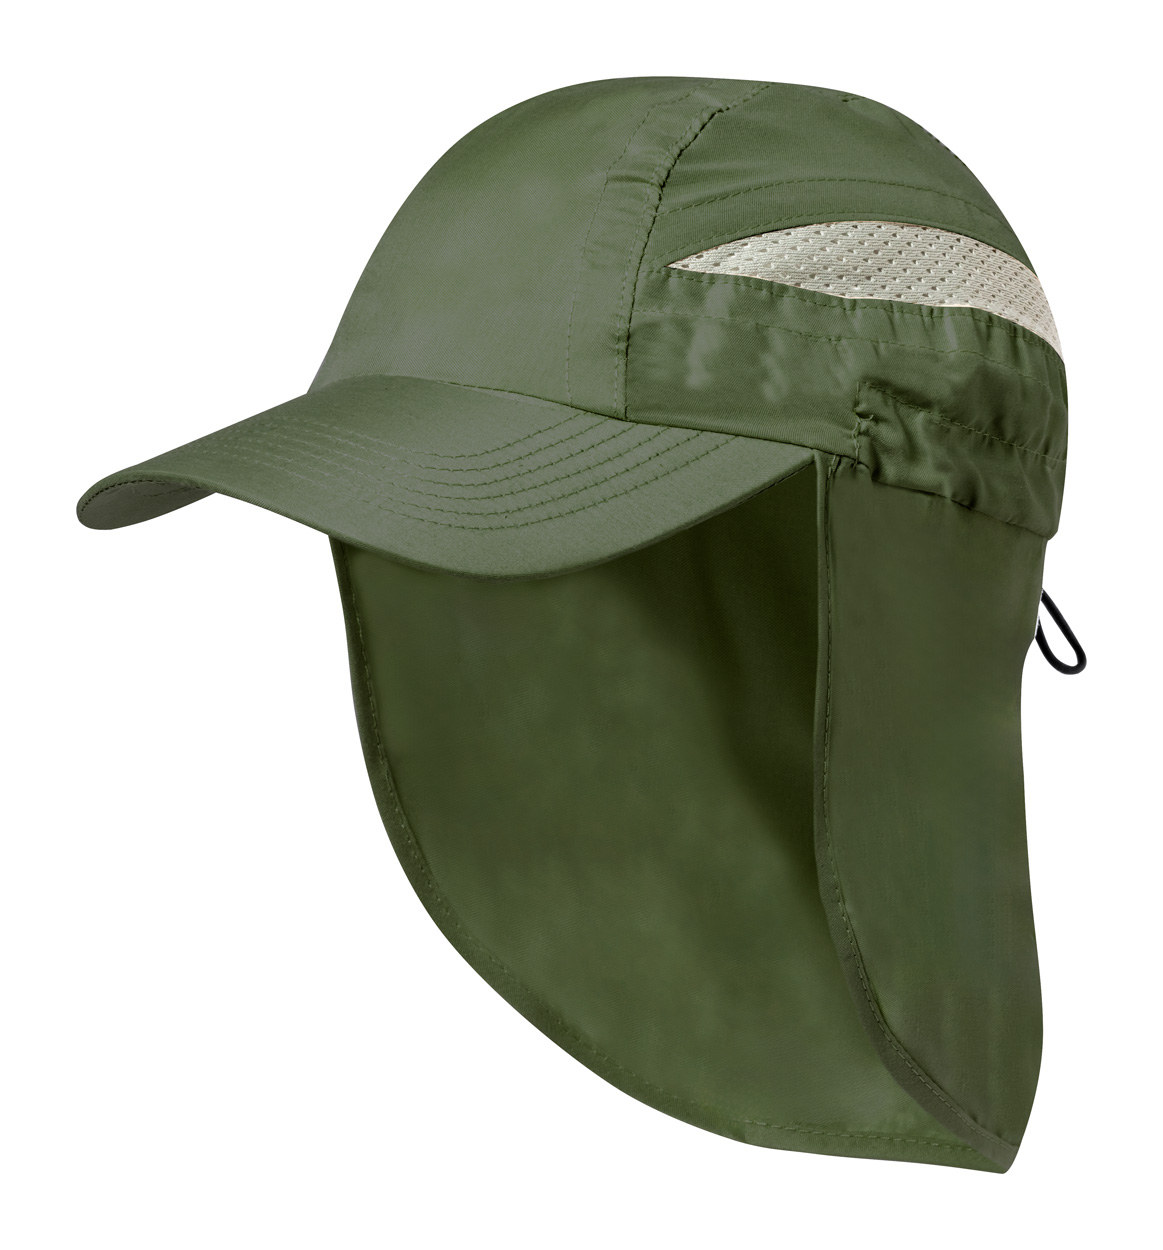 Levant baseball cap - green